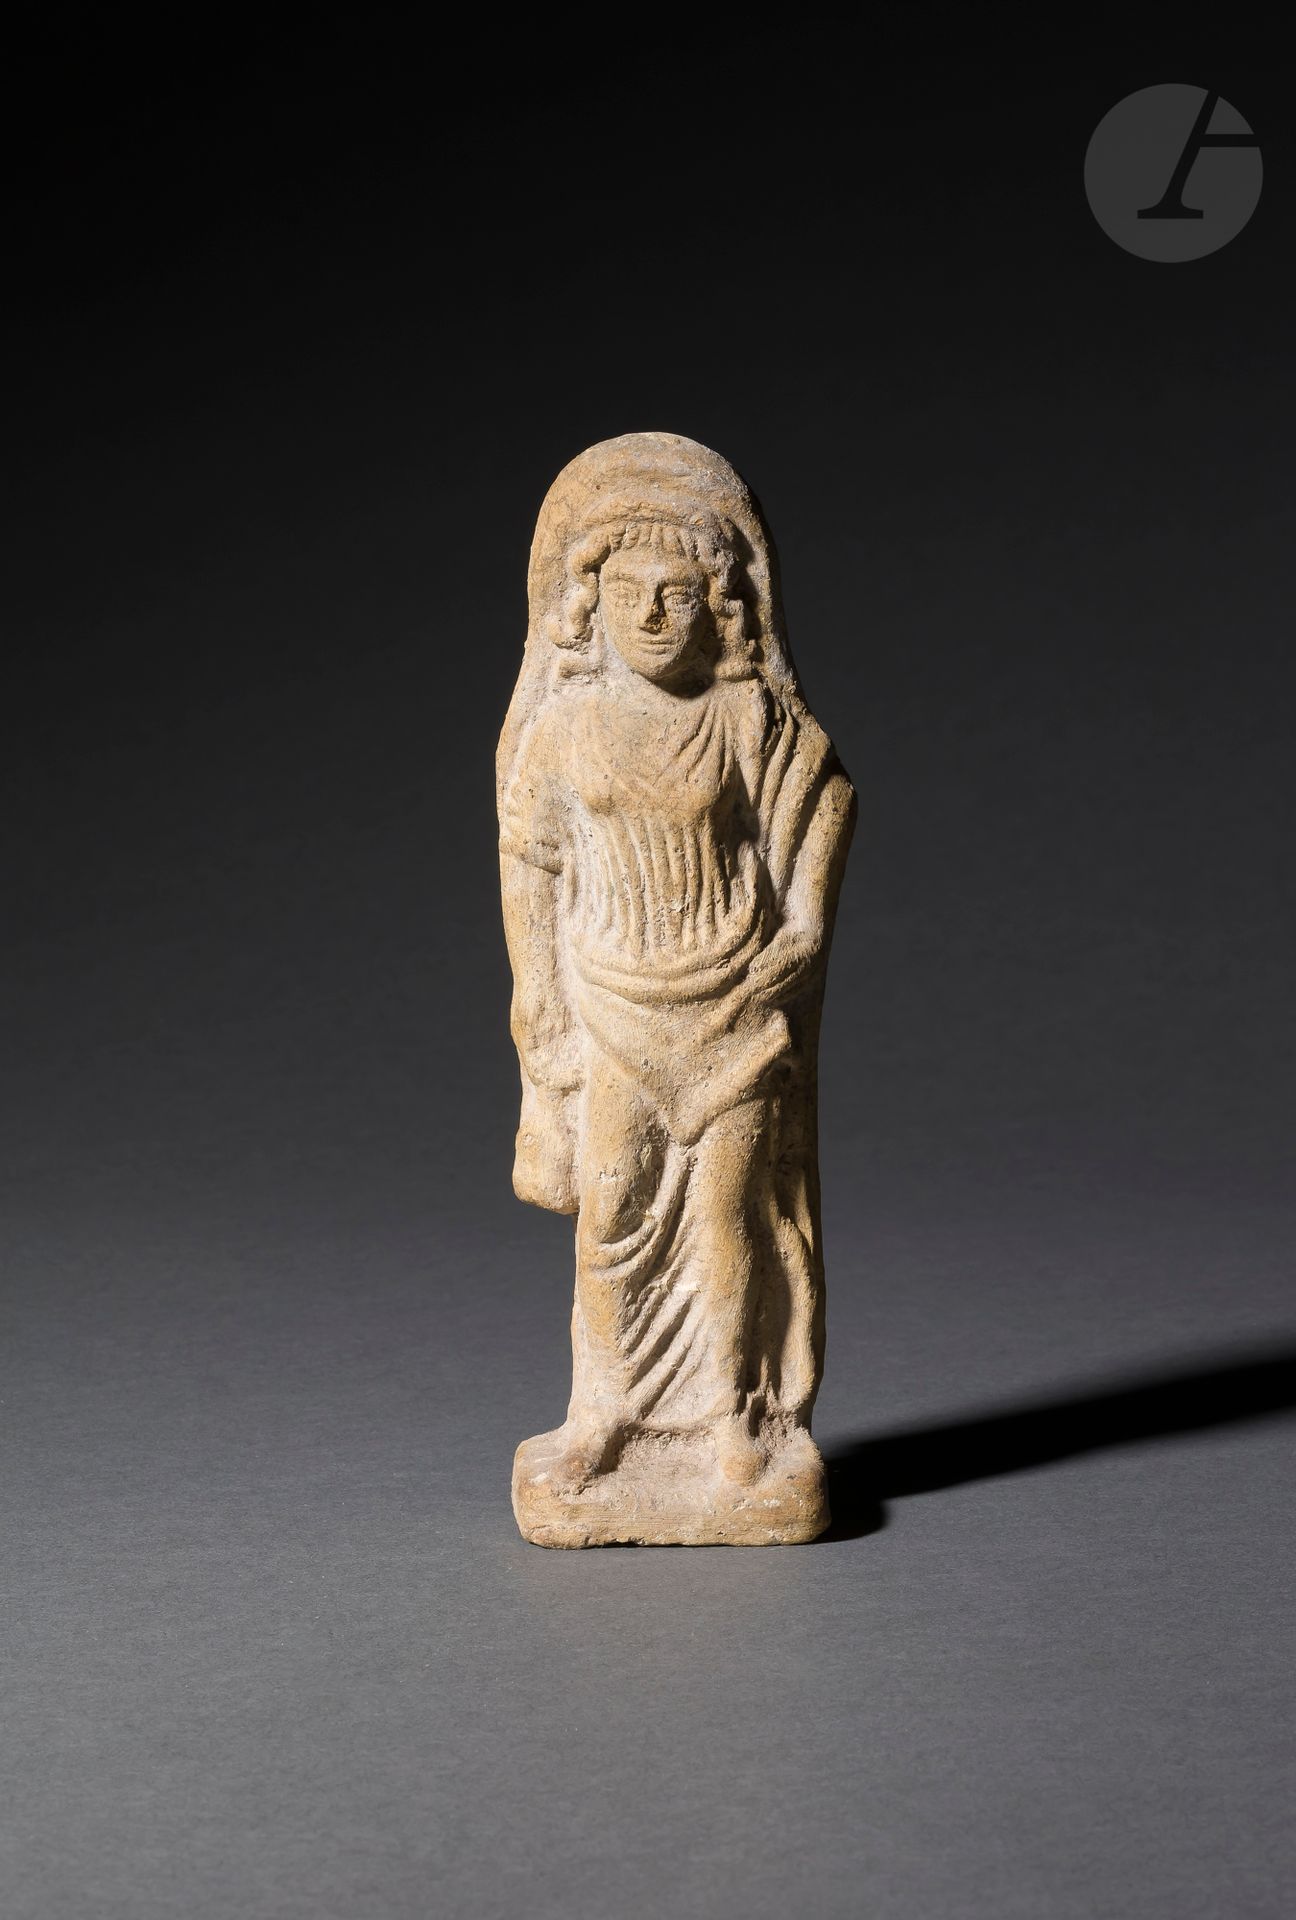 Null 表现女性形象的高浮雕雕像
她双腿交叉站立，身穿披肩，头戴帽子，手里拿着一个钱包。
陶器。
公元前4世纪的伊特鲁里亚艺术或Magna Graecia 
&hellip;